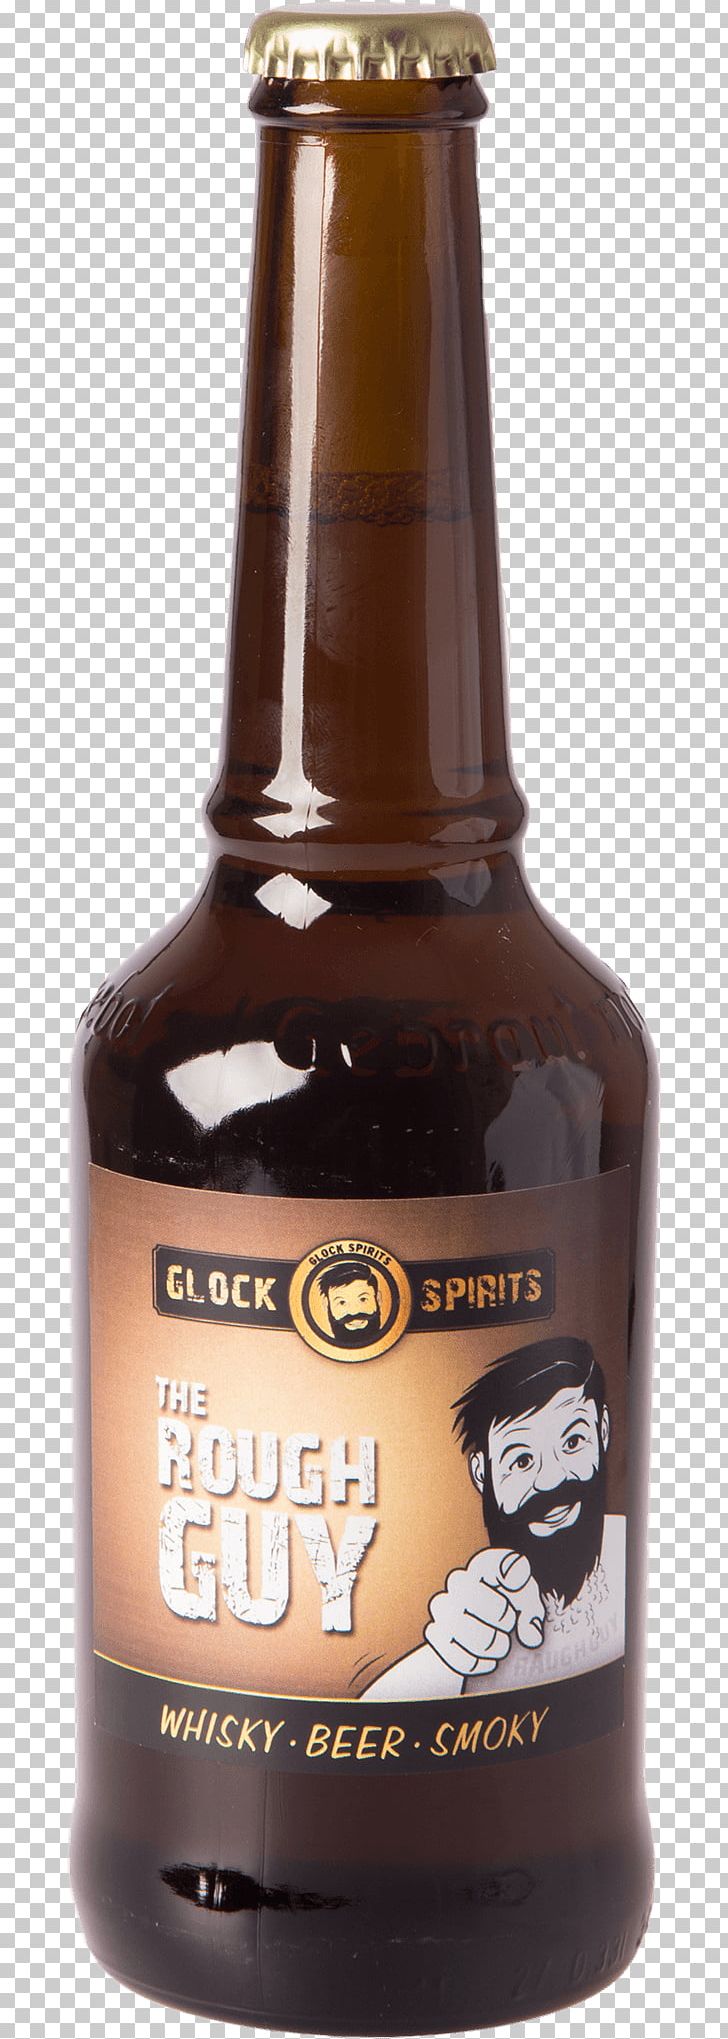 Beer Bottle Distilled Beverage Bell's Brewery Ale PNG, Clipart,  Free PNG Download